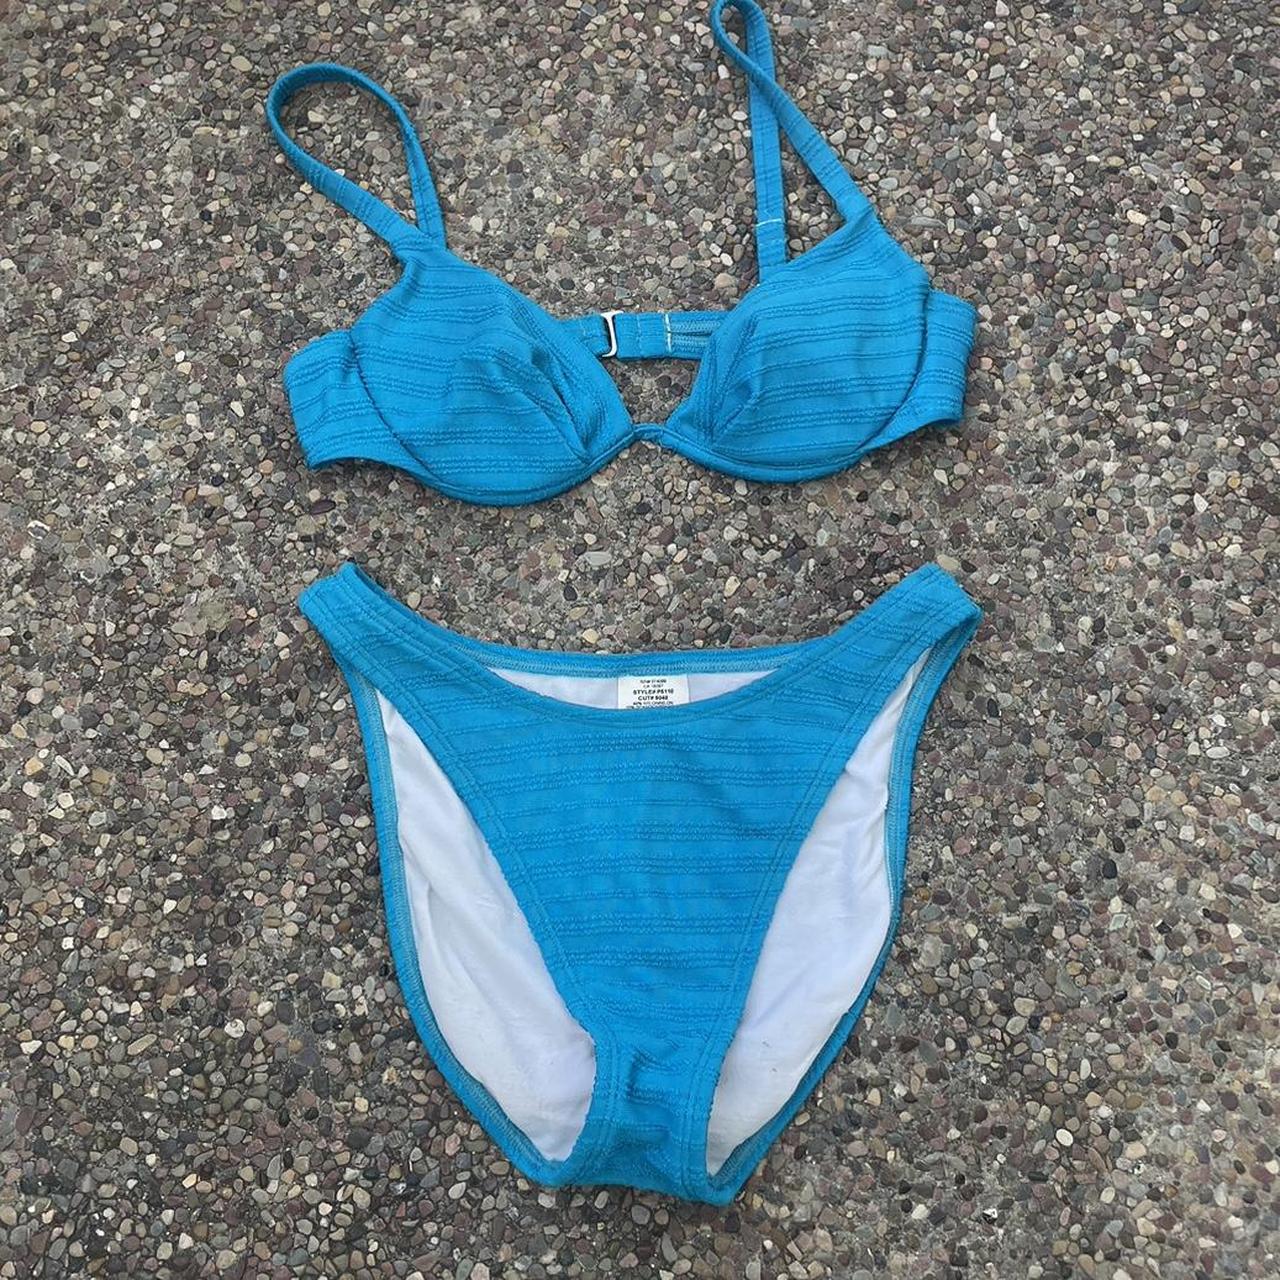 JAG Women's Blue Bikinis-and-tankini-sets (2)